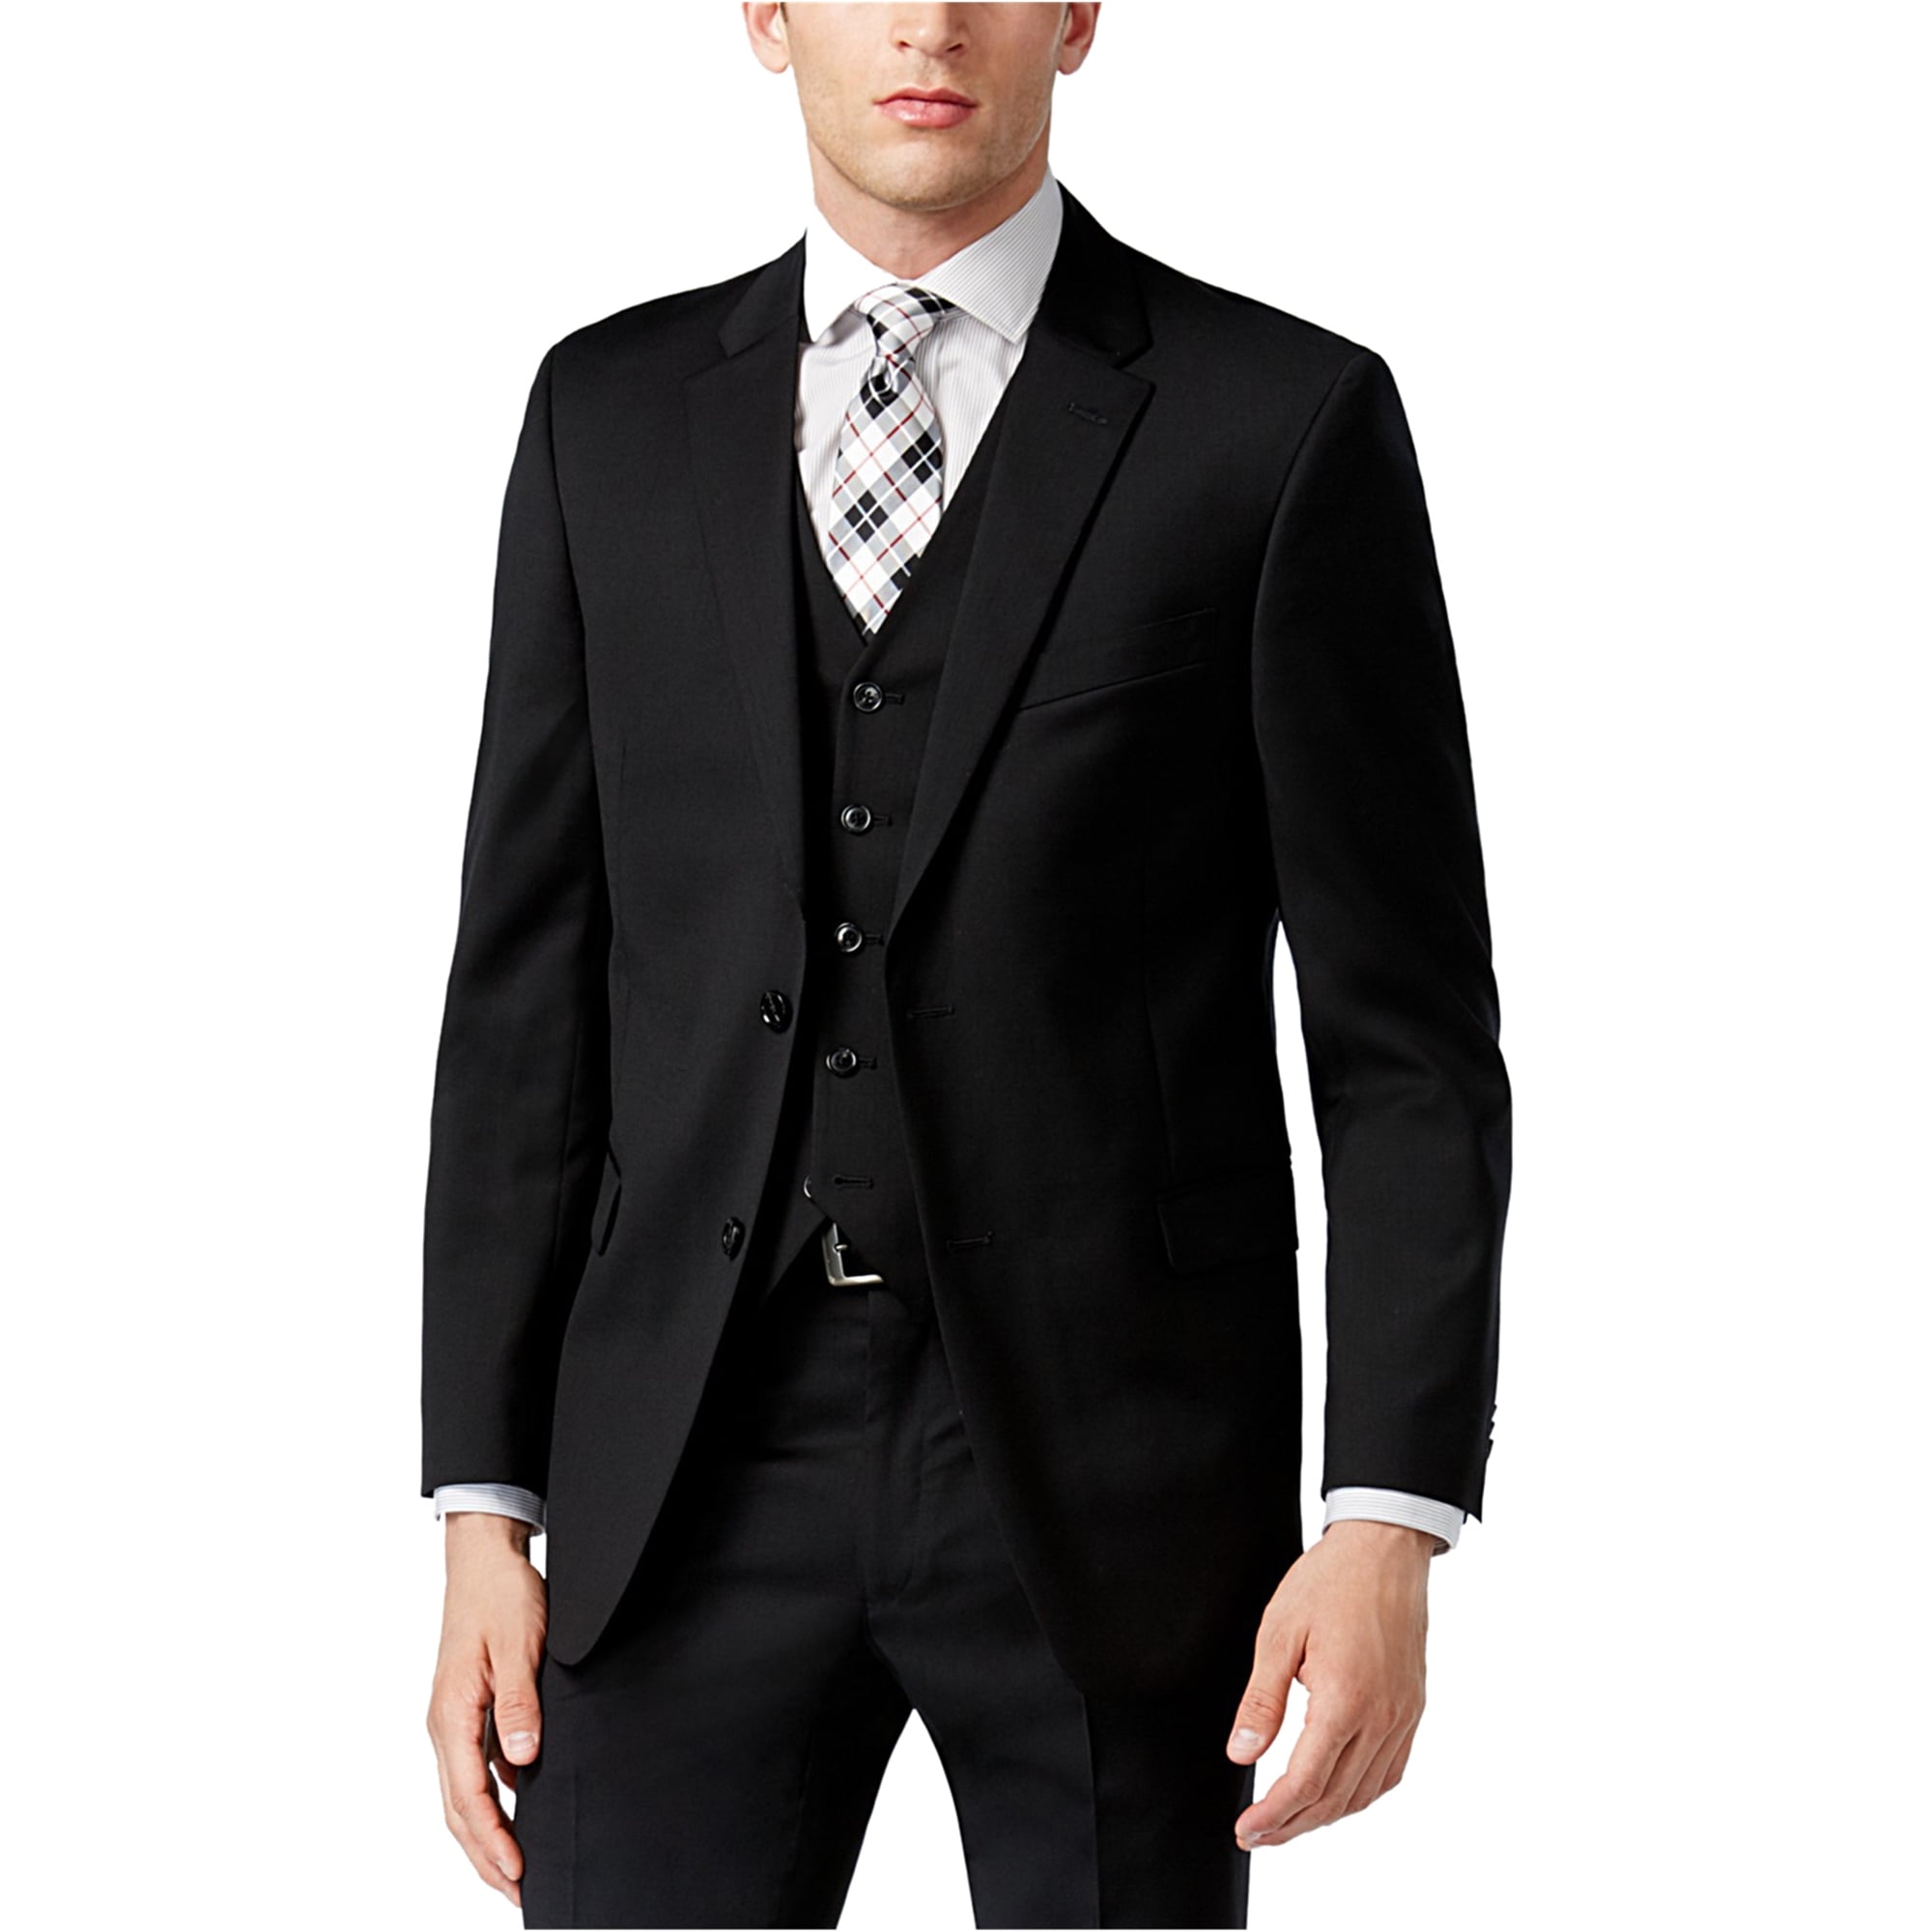 Matching Pants 100% Wool Oxford Grey Stroller Tuxedo Coat Men's 